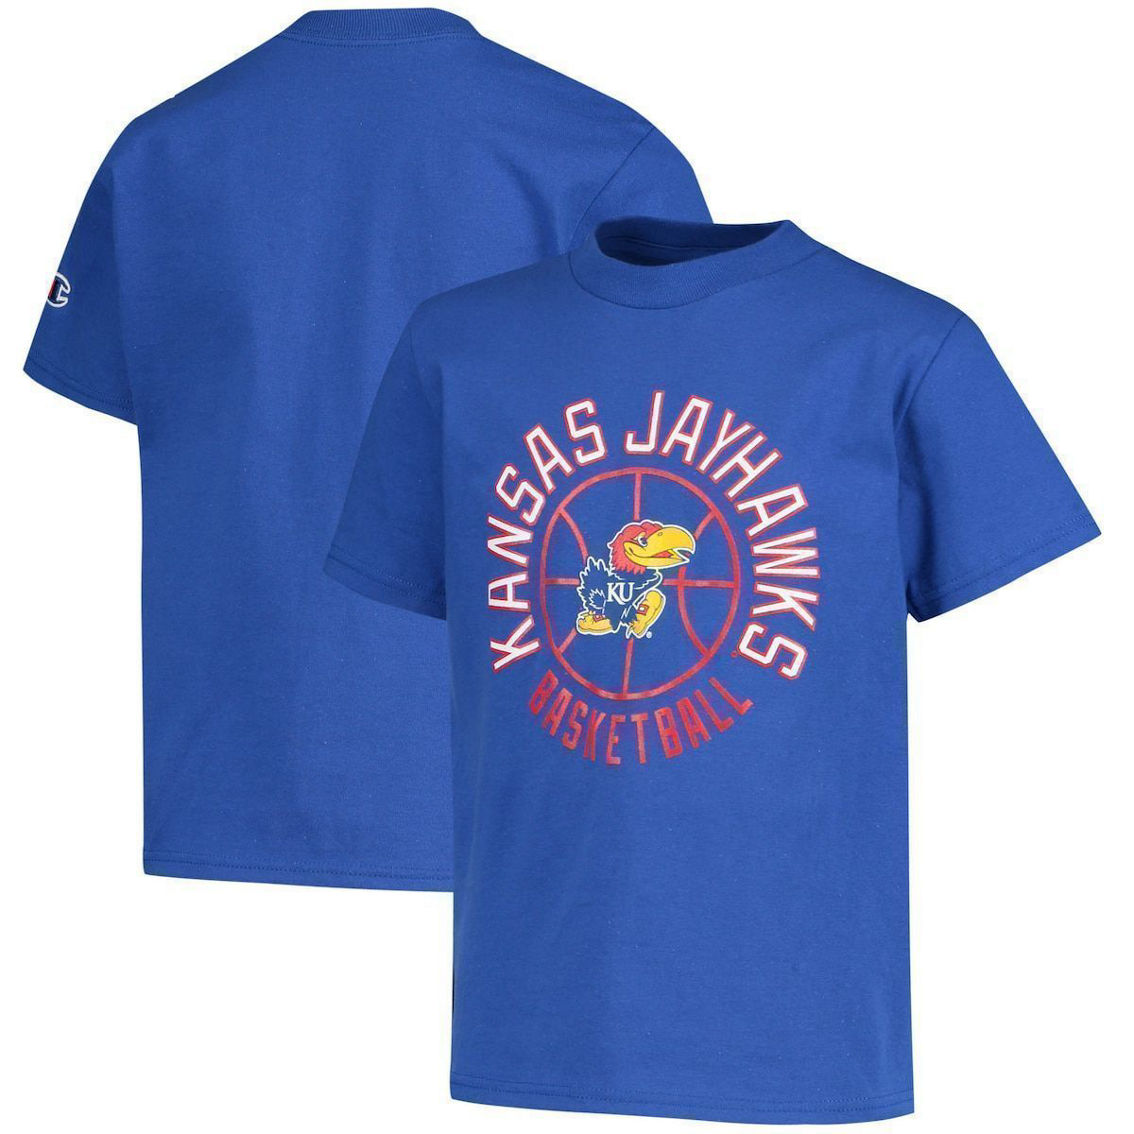 Champion Youth Royal Kansas Jayhawks Basketball T-Shirt - Image 2 of 4